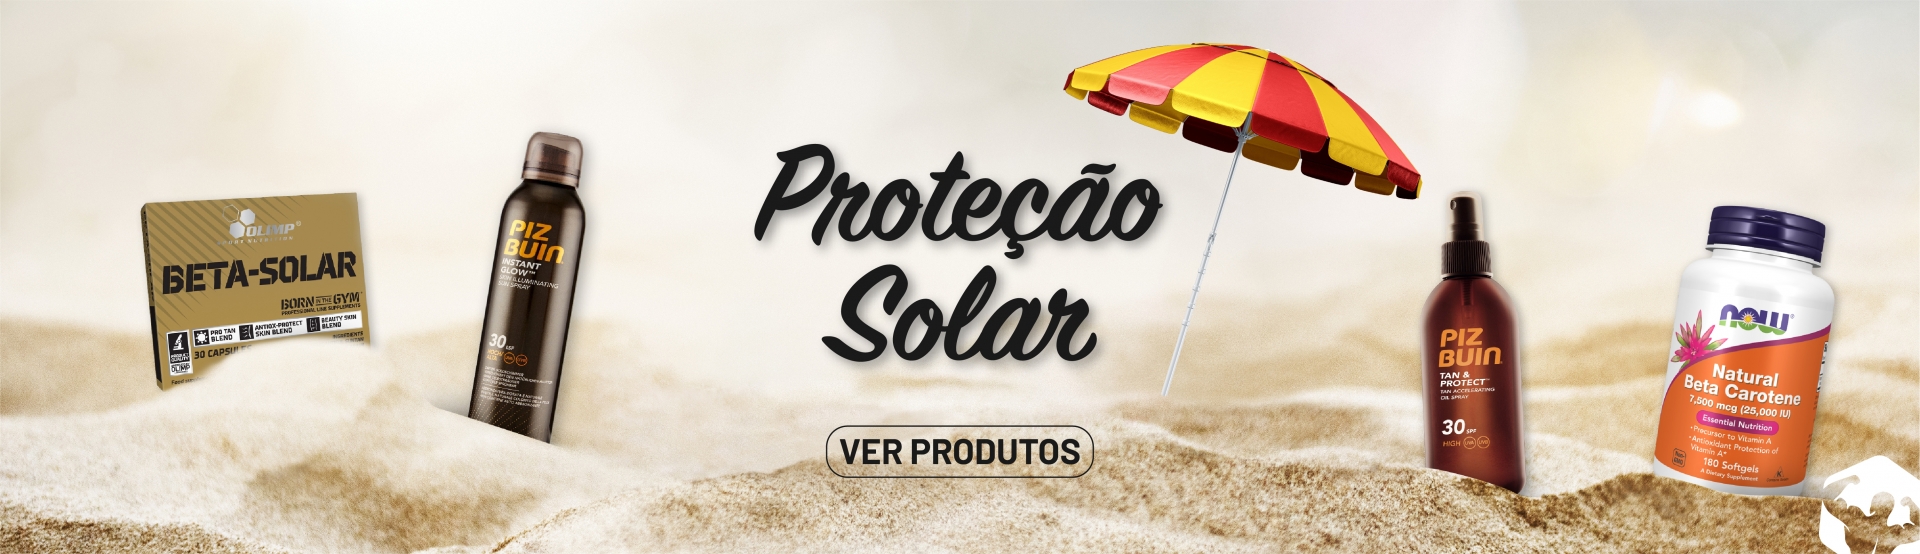 Protecao_solar